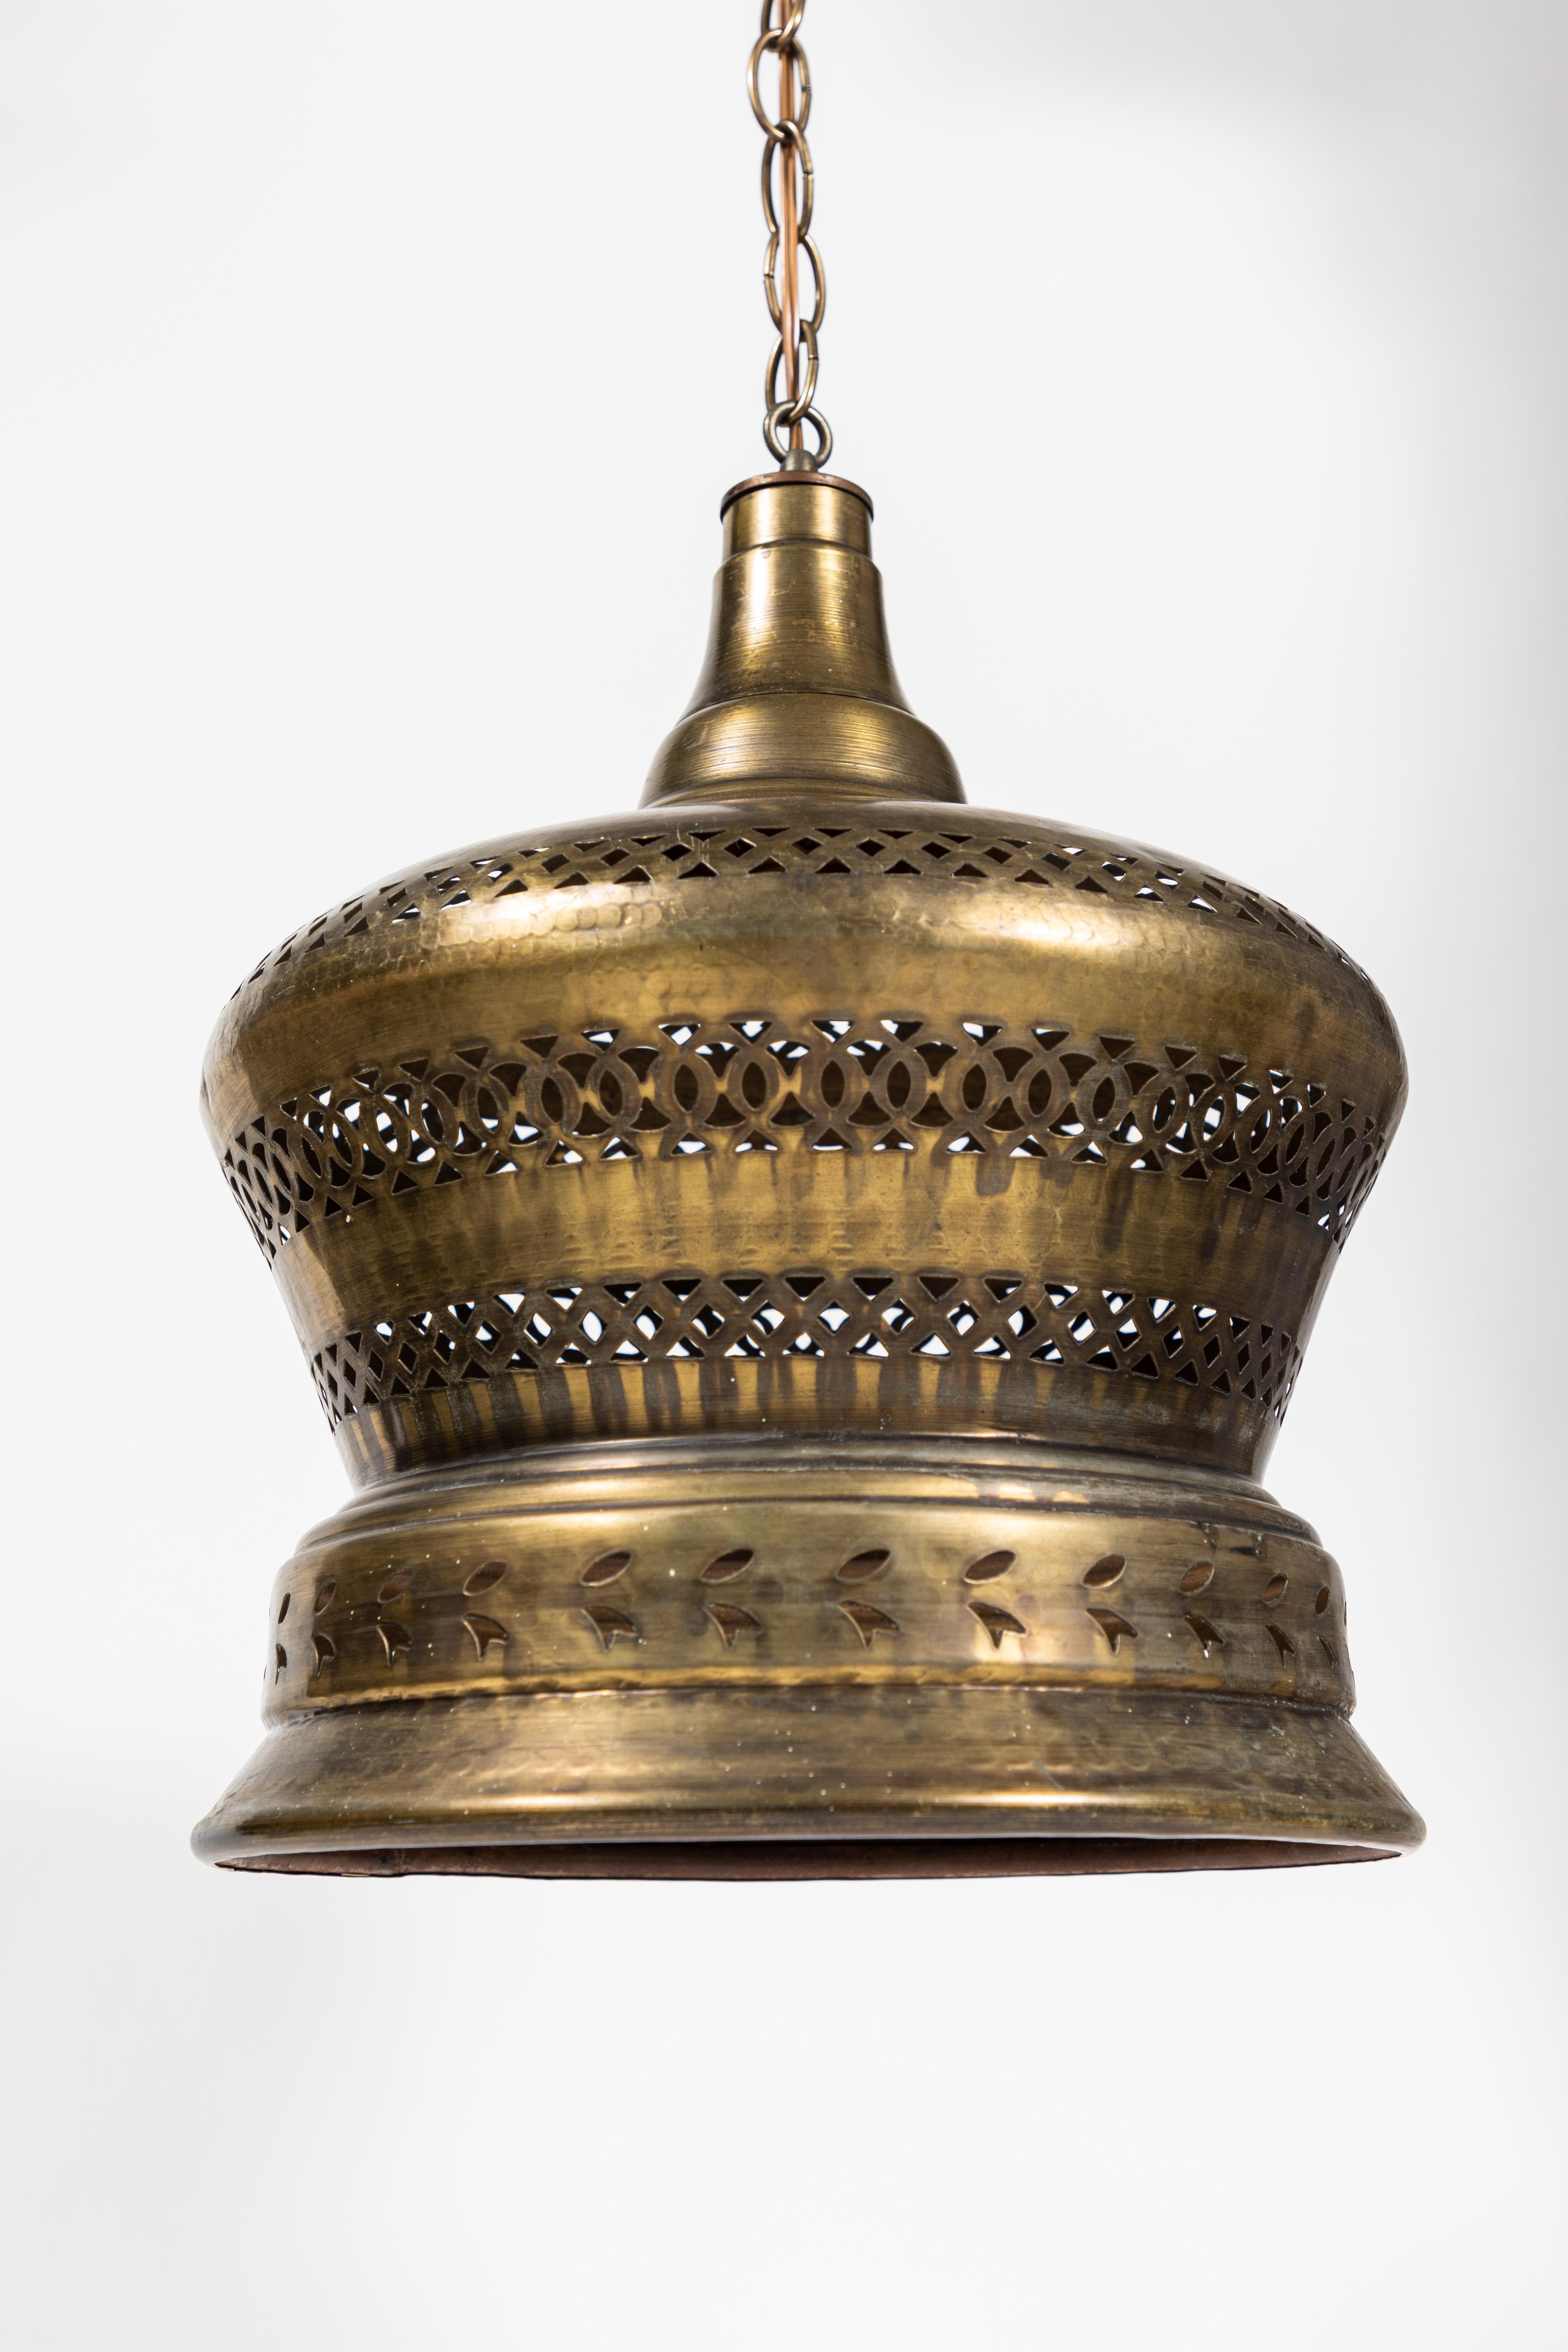 Vintage Moroccan pierced brass hanging lantern. Newly rewired.